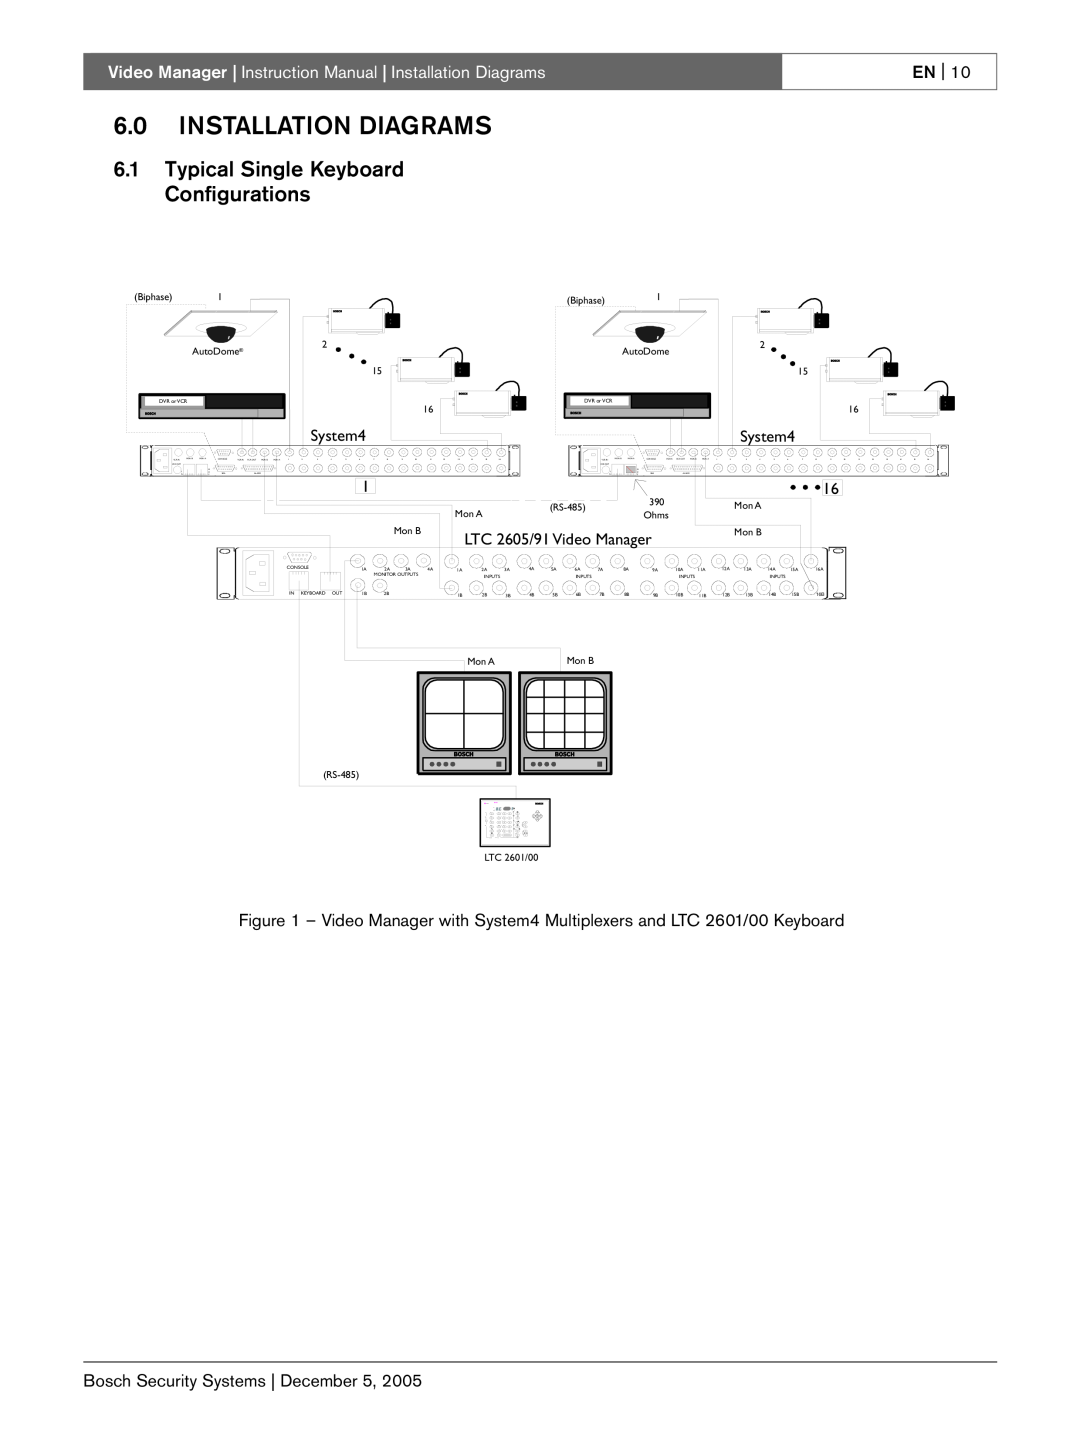 Bosch Appliances LTC 2605/91 instruction manual 6.0INSTALLATION DIAGRAMS, 6.1Typical Single Keyboard Configurations, En 